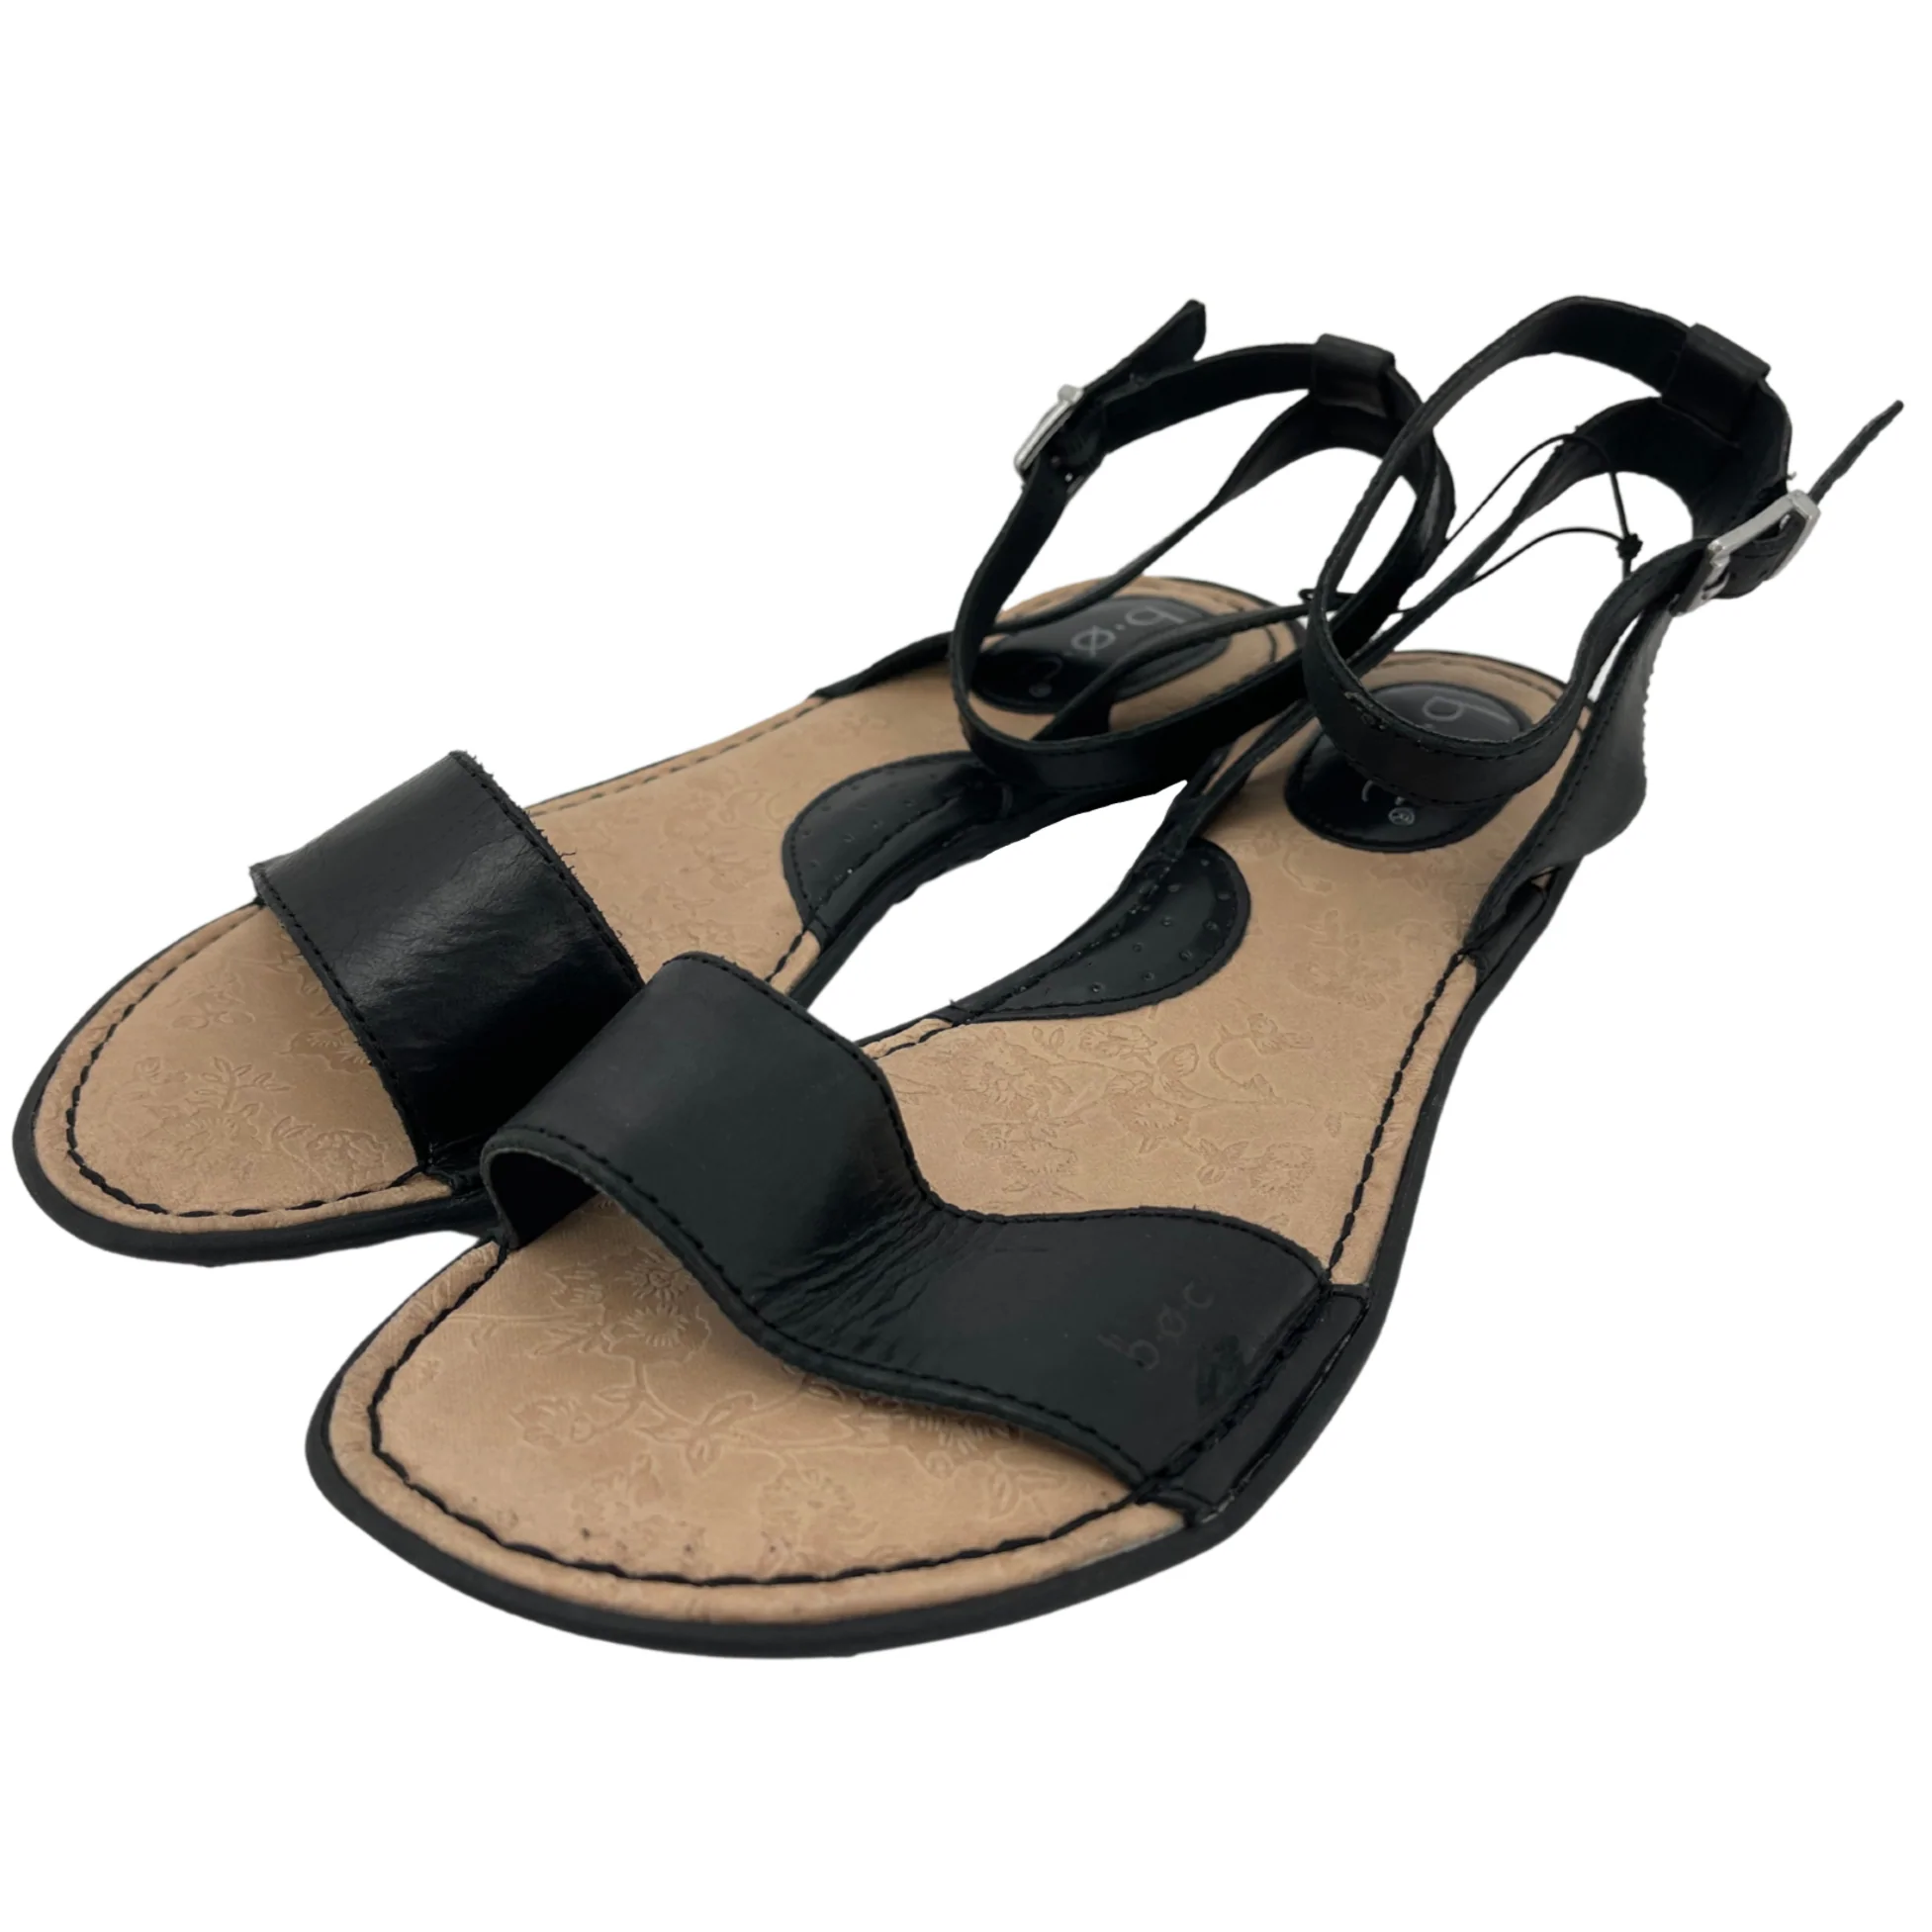 BOC Women's Sandals: Strappy Summer Shoes / Black / Various Sizes